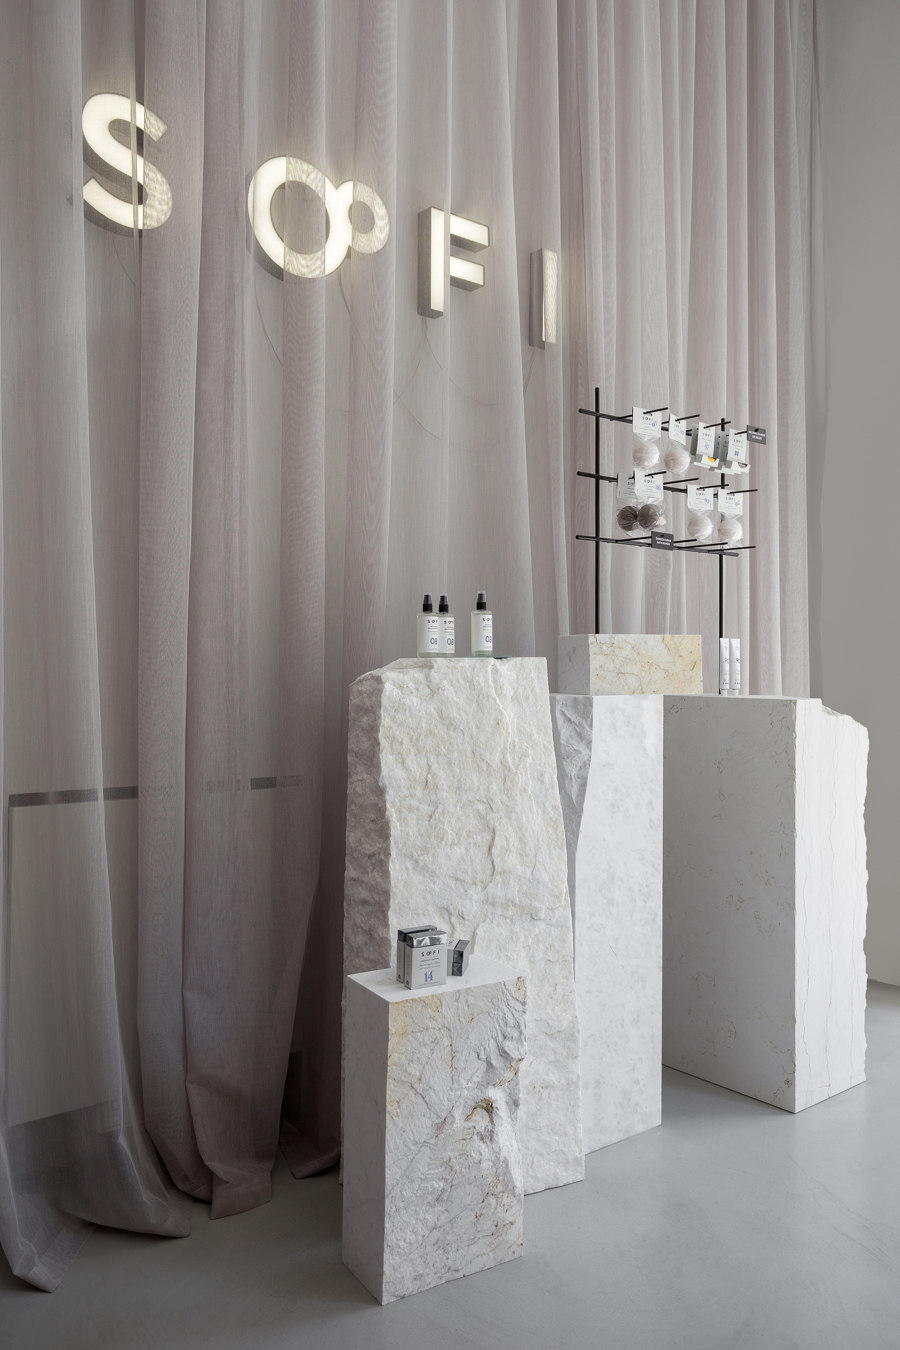 SOFI Natural Cosmetics Shop von Studio AUTORI | Shop-Interieurs